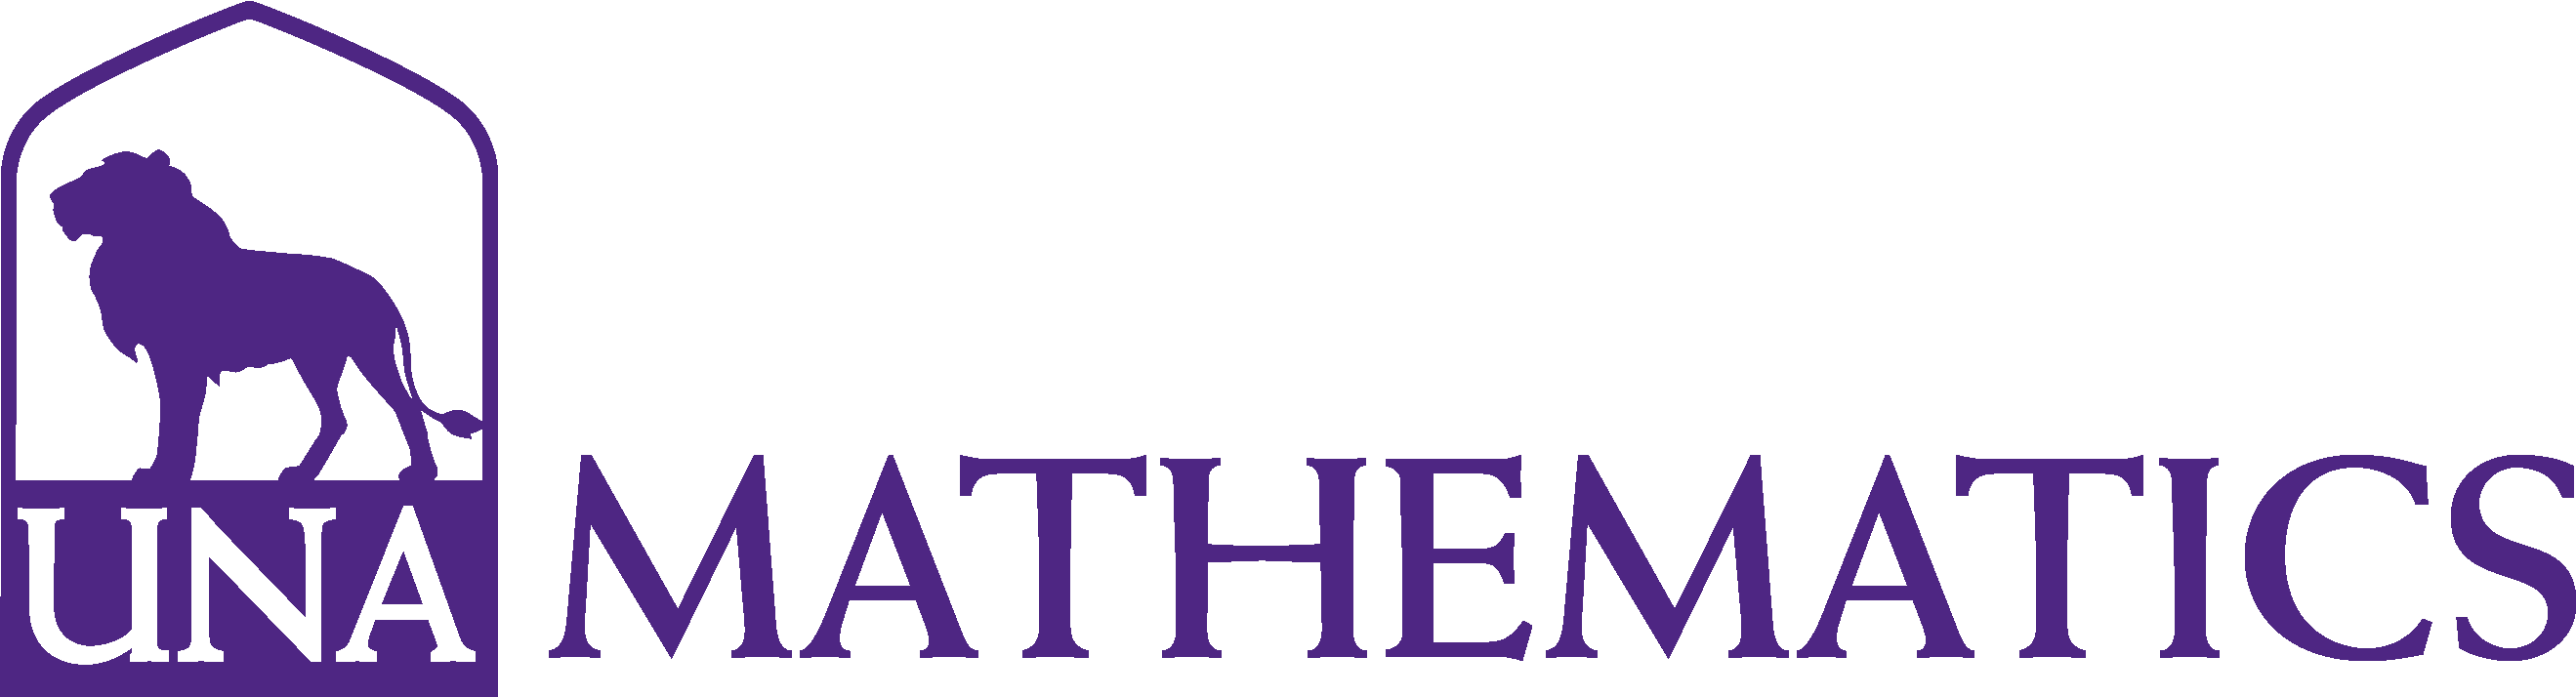 mathematics logo 3